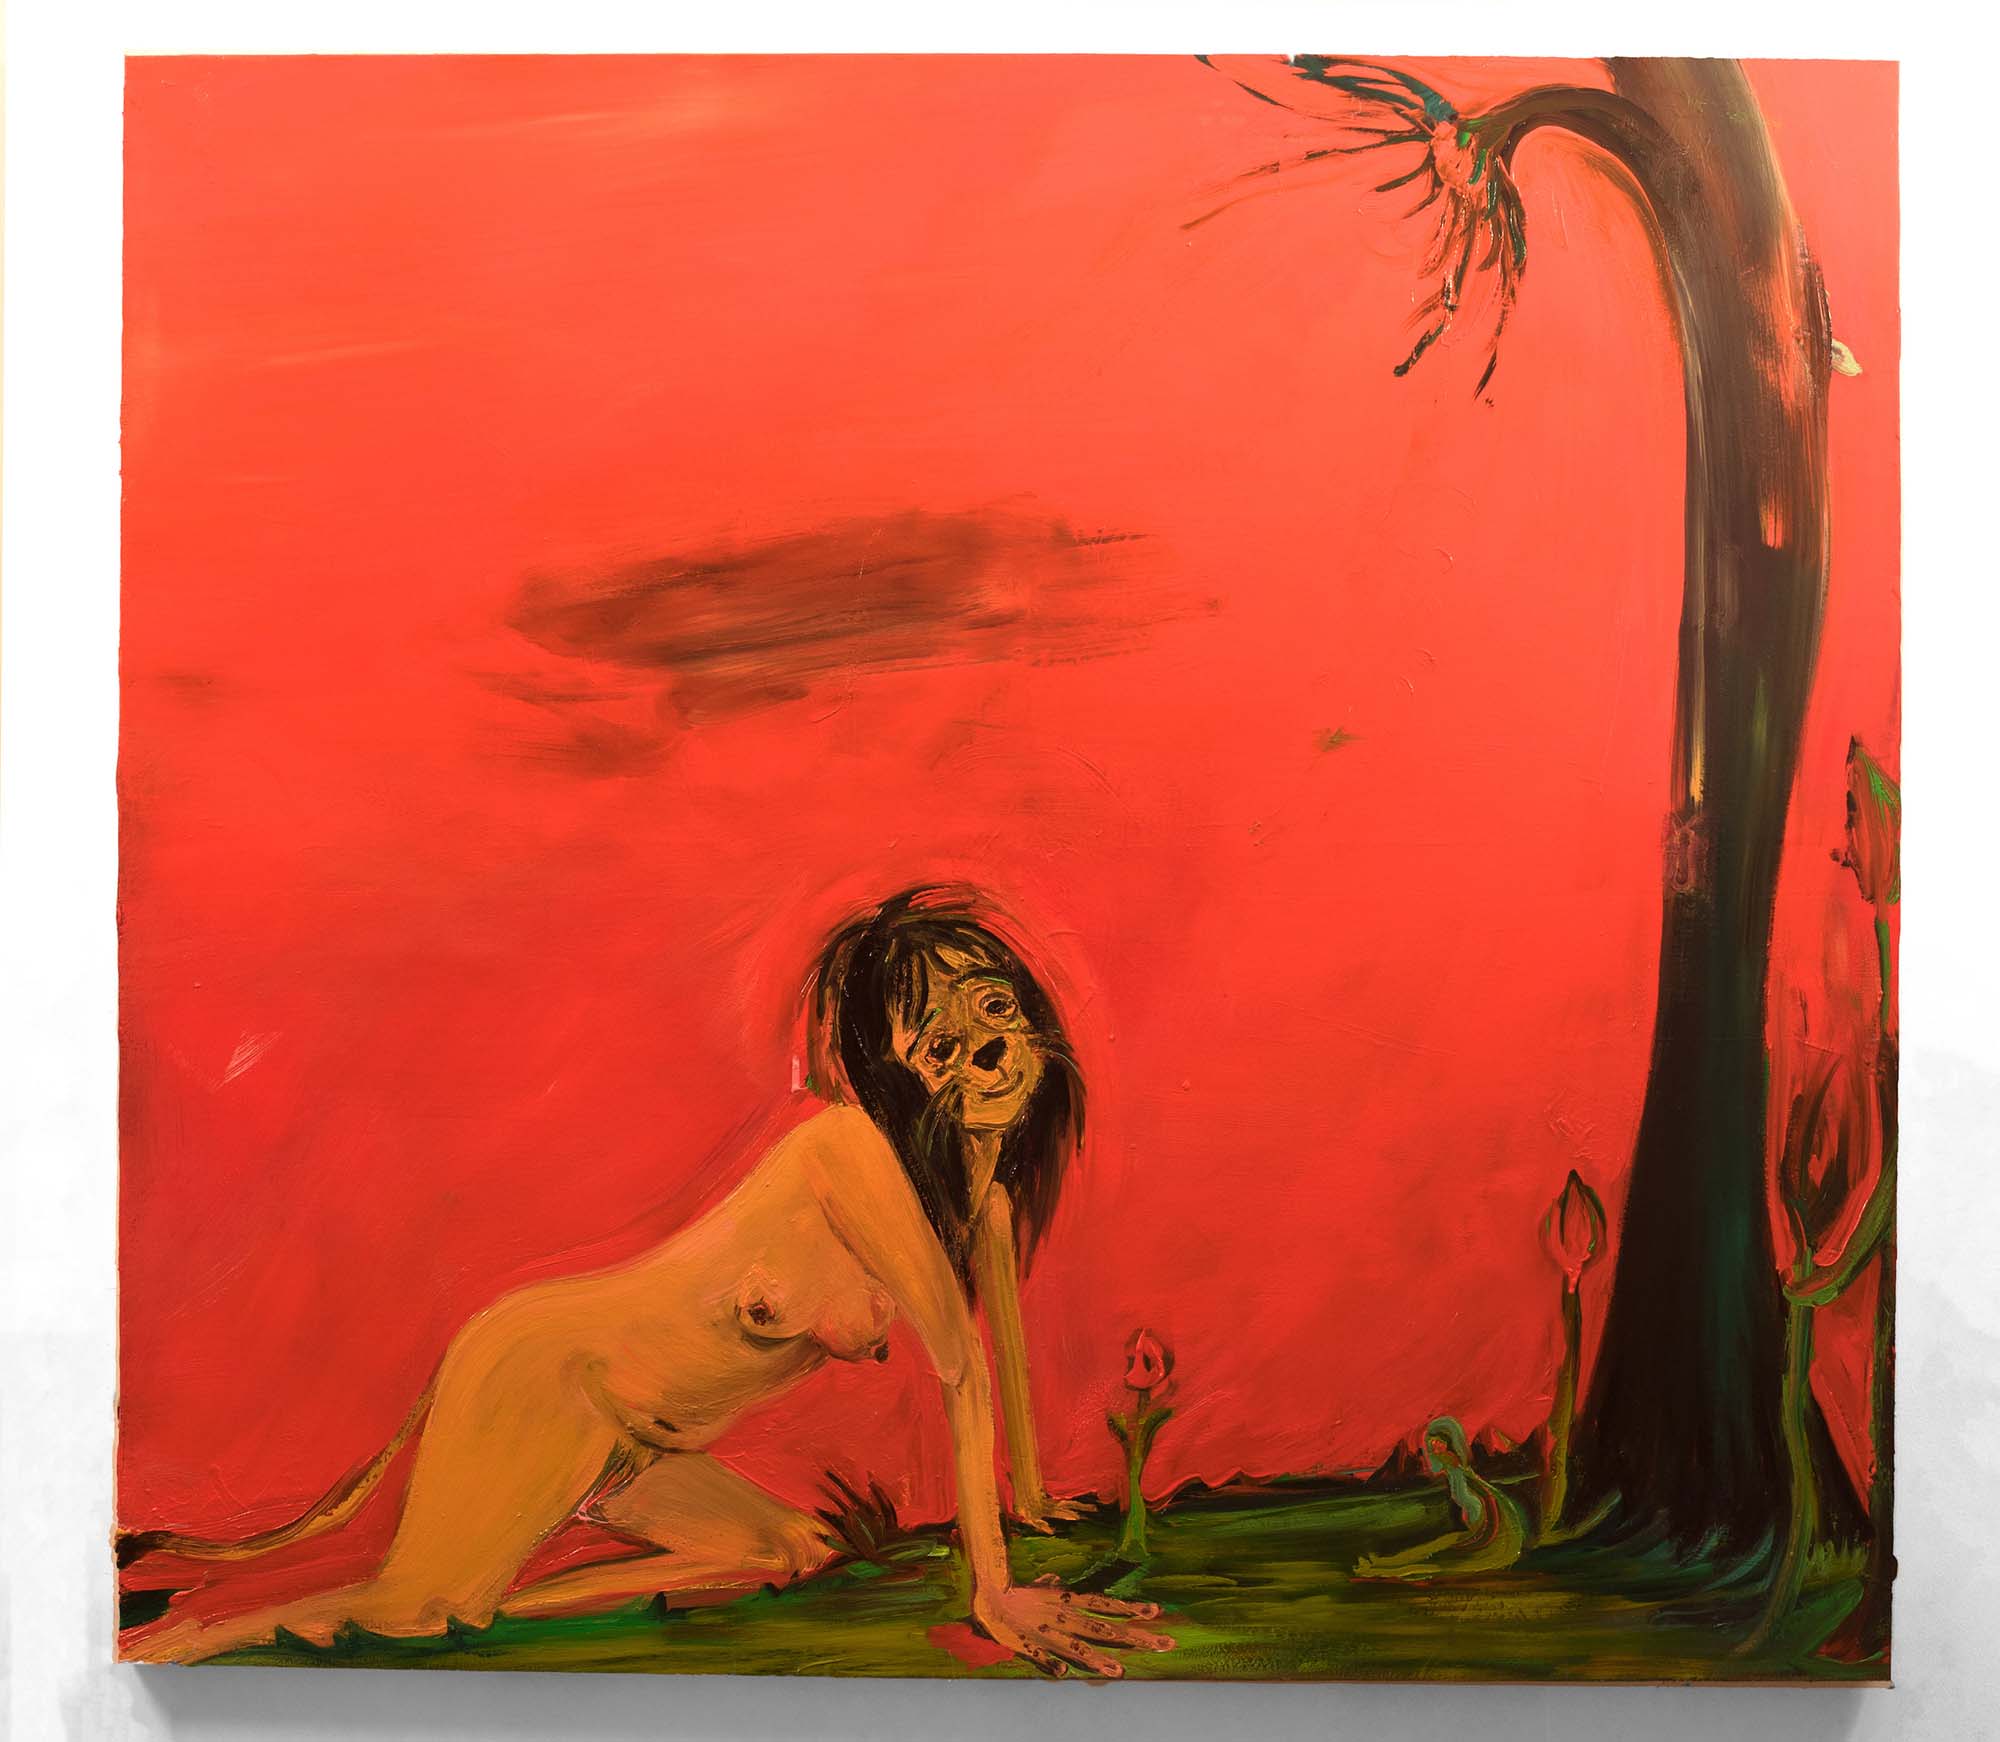 Tsailing Tseng, Animal instinct, oil on canvas, 50 x 55 inches, 2019